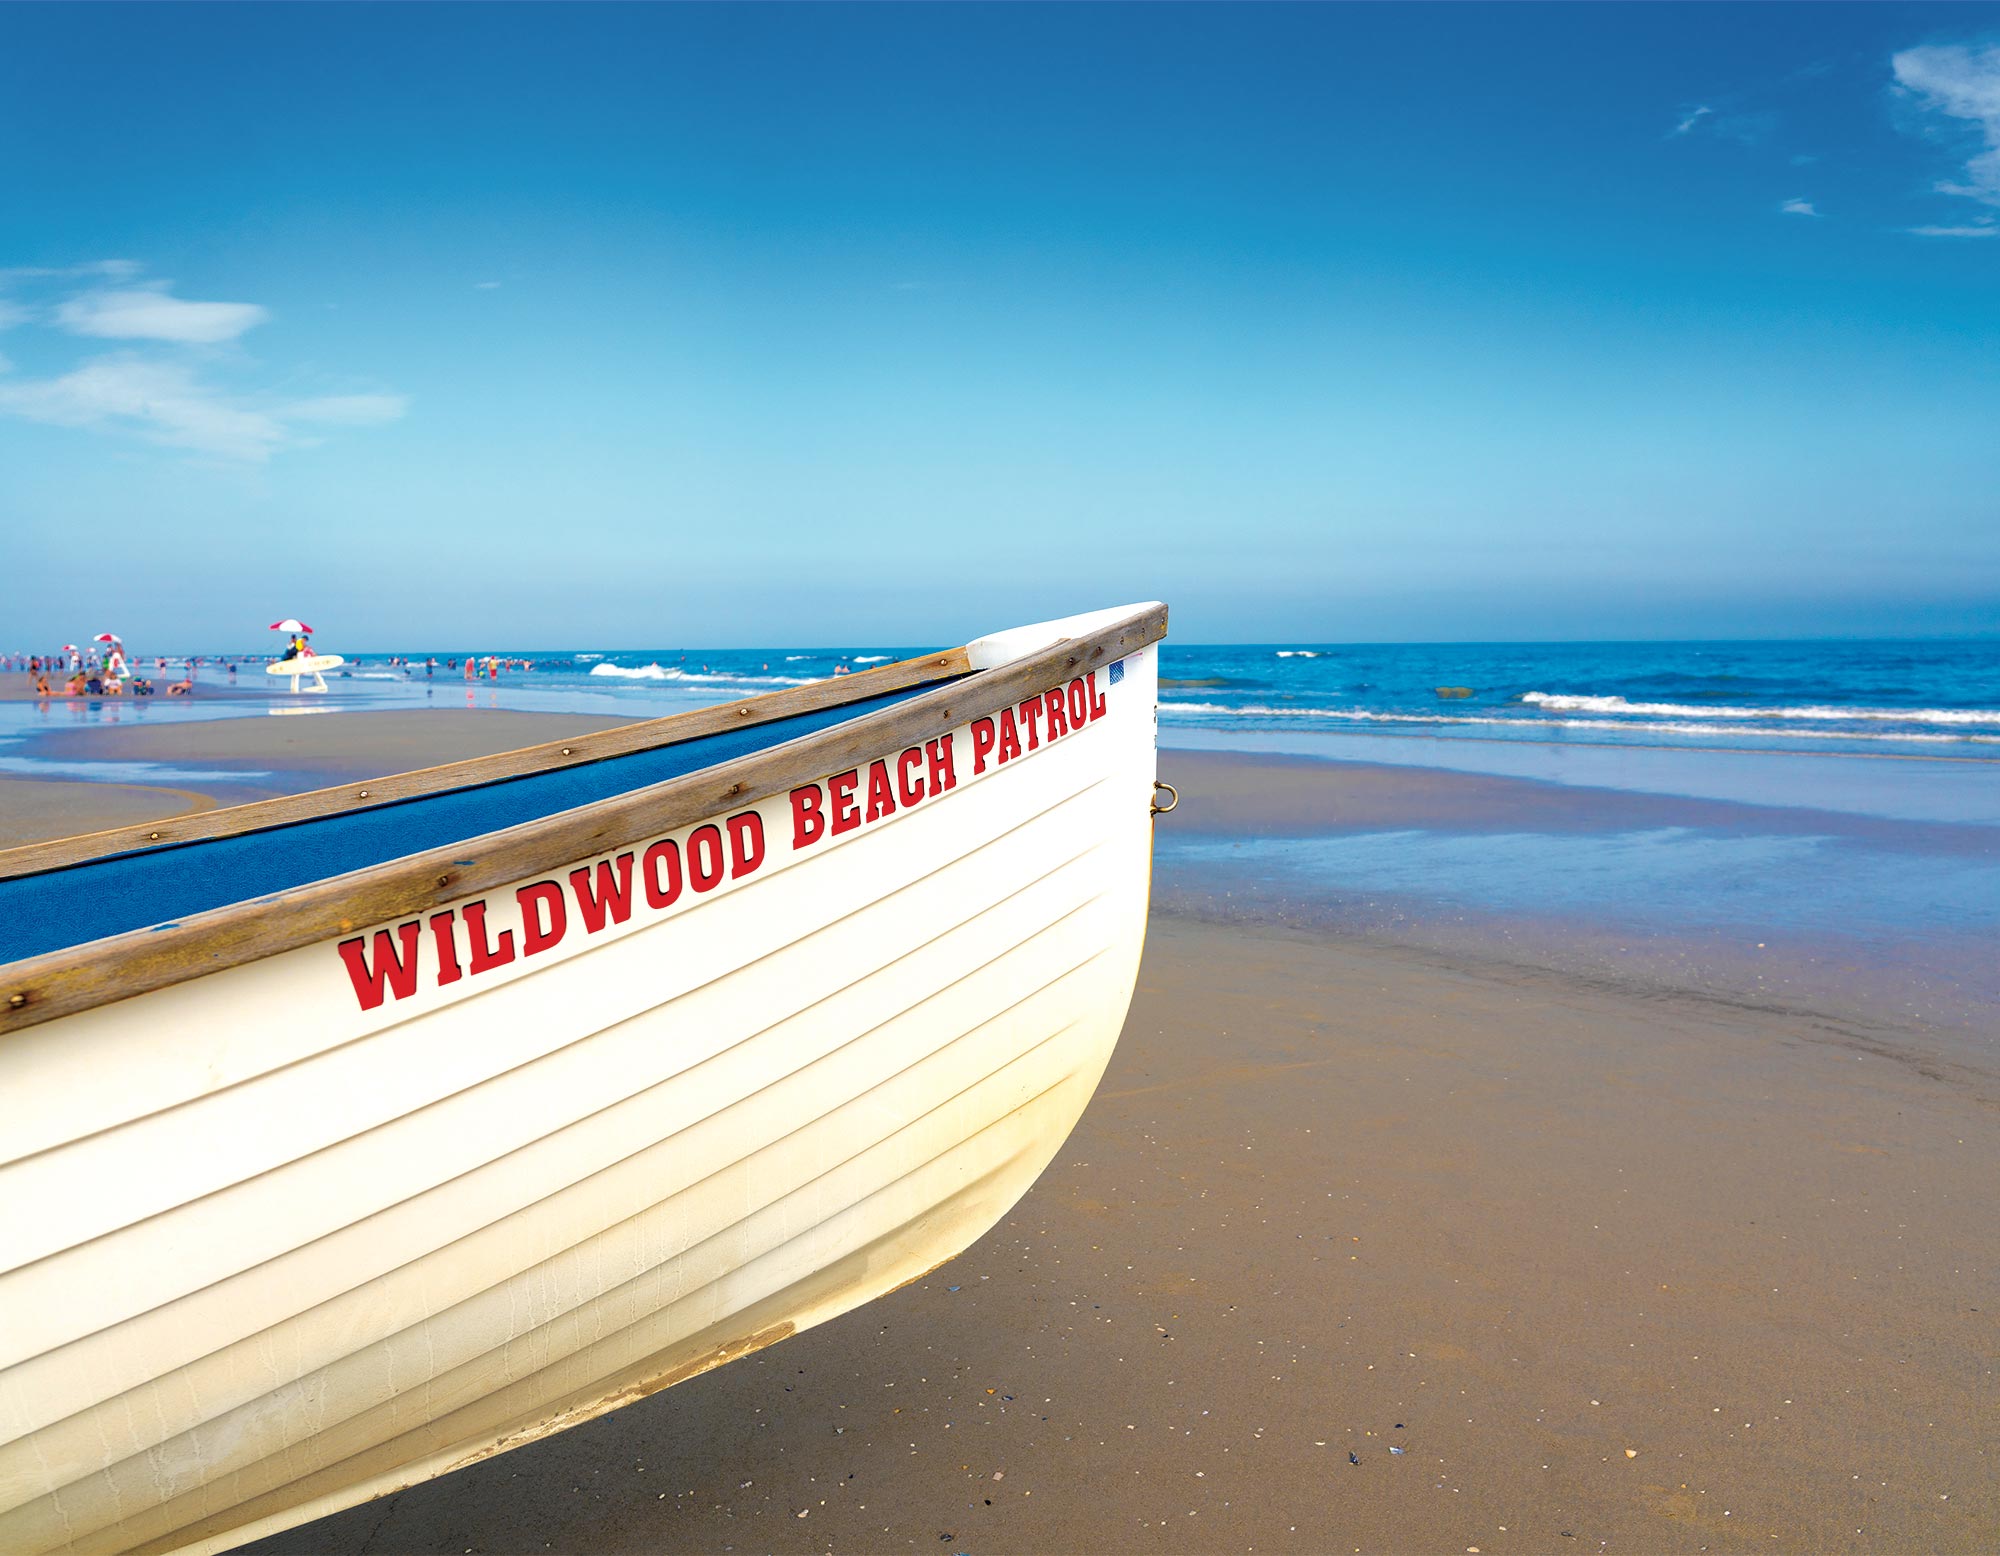 Wildwood Beach Patrol Boat - Matted 11x14